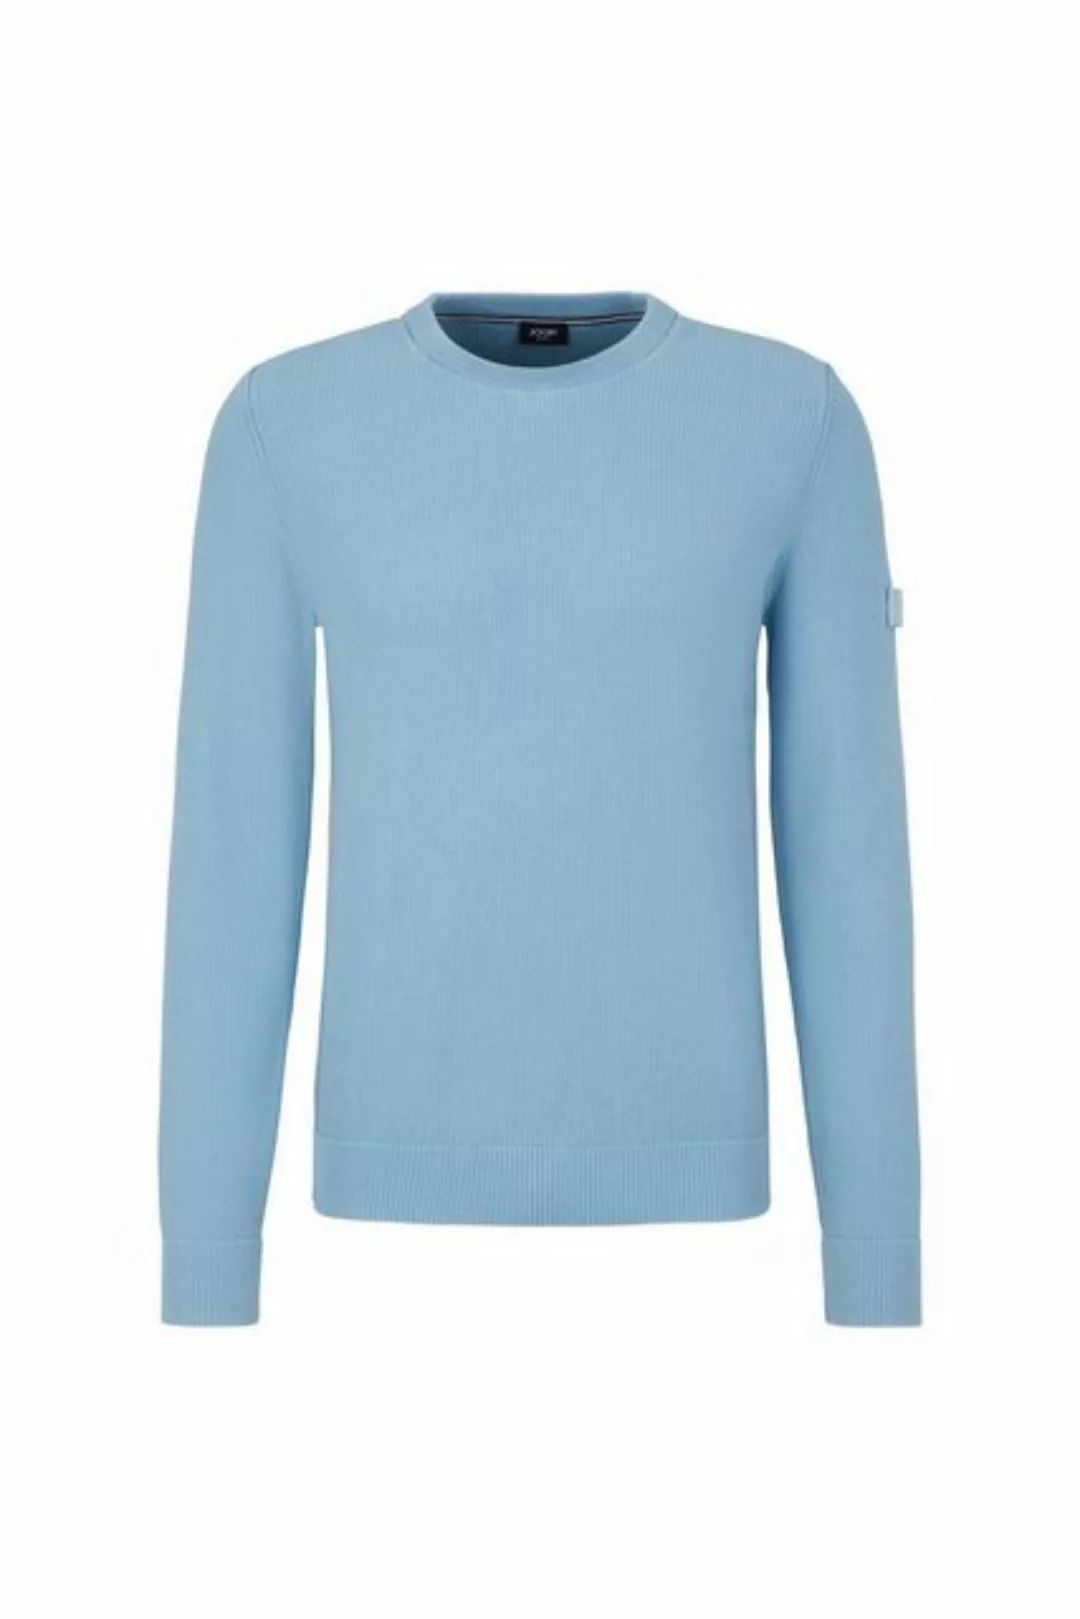 Joop Jeans Sweatshirt 15 JJK-17Holino 10015886 günstig online kaufen